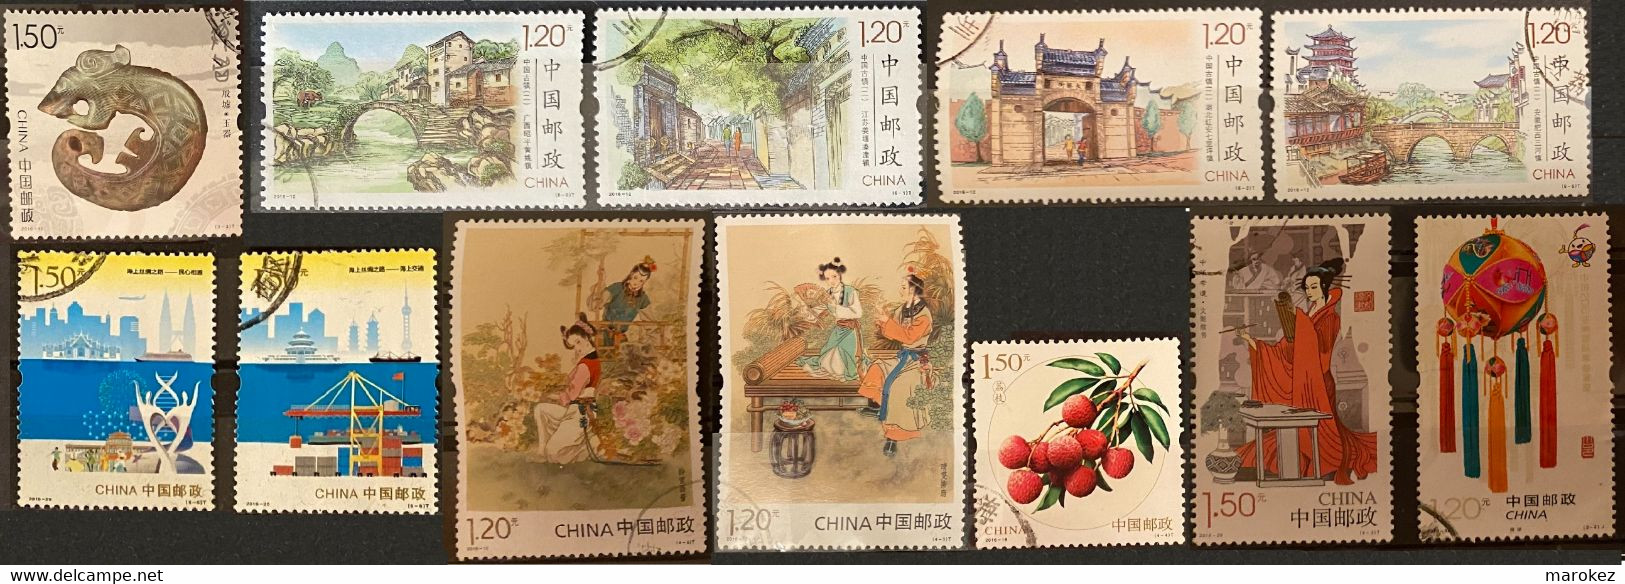 CHINA PRC 2016 12 Postally Used Stamps MICHEL # 4789-90,4793-94,4800-01,4809,4813,4835-36,4841,4861 - Usados